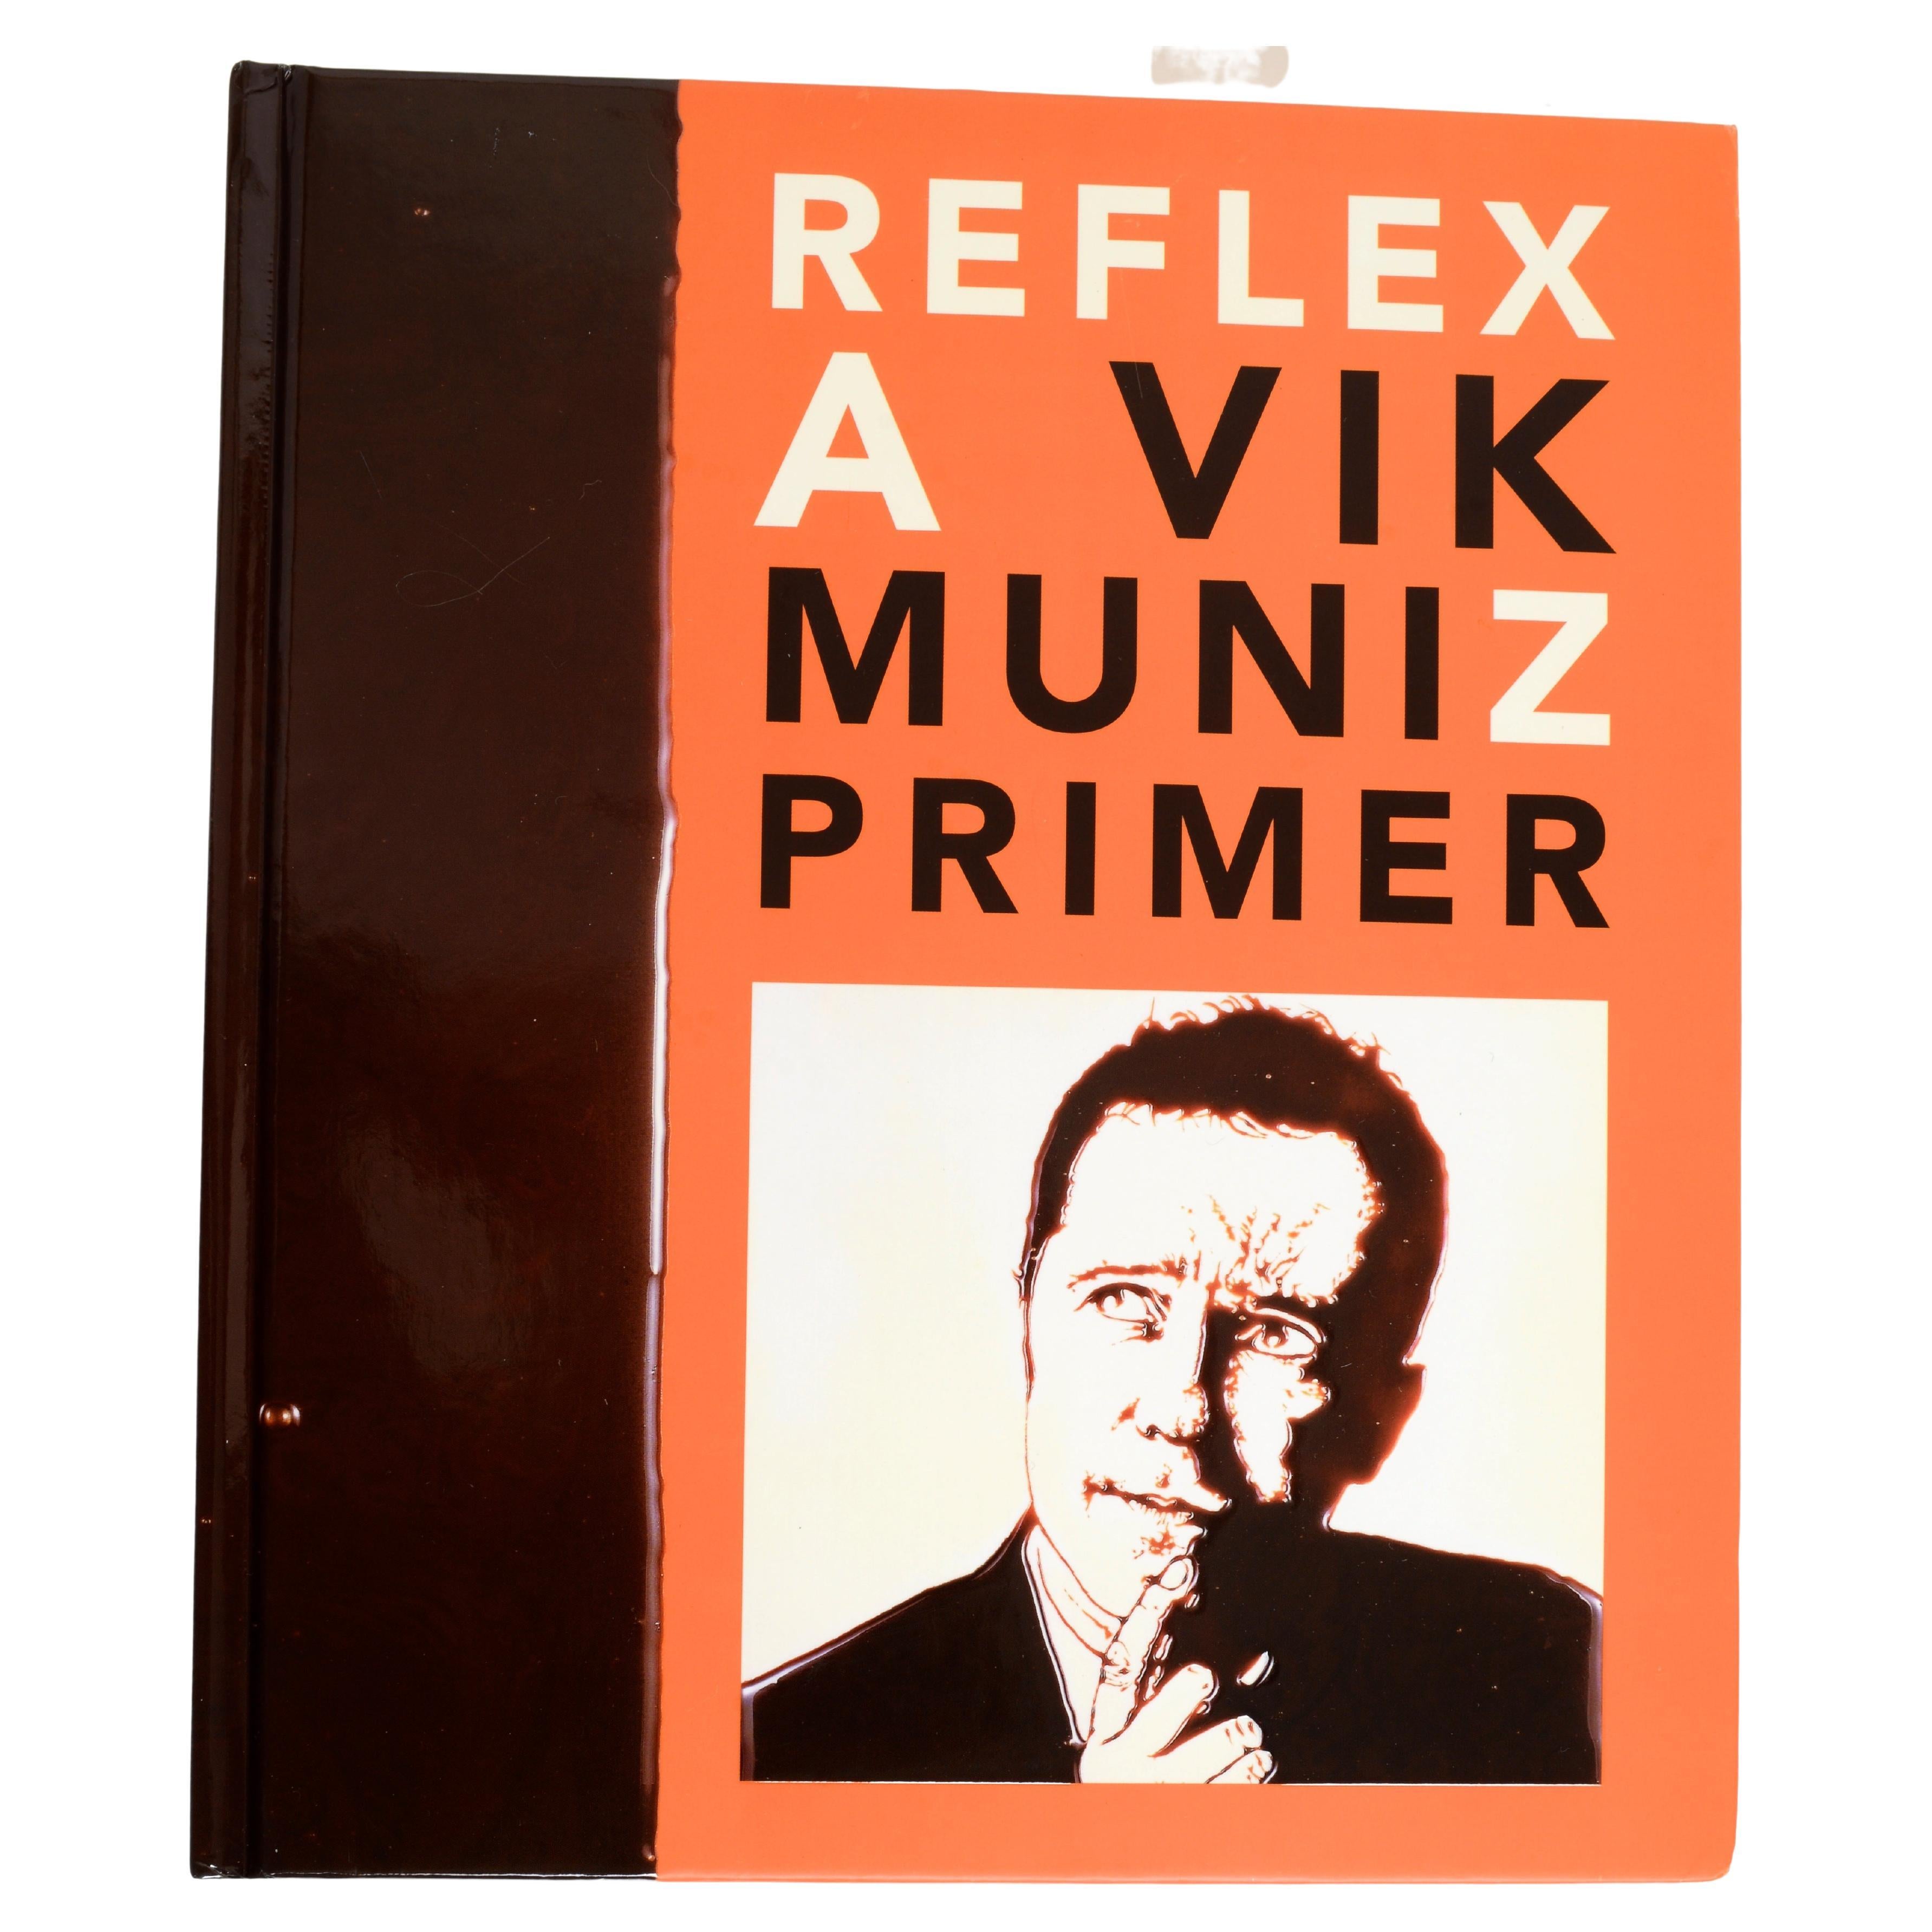 Vik Muniz: Reflex: A Vik Muniz Primer by Lesley Martin, Stated 1st Ed